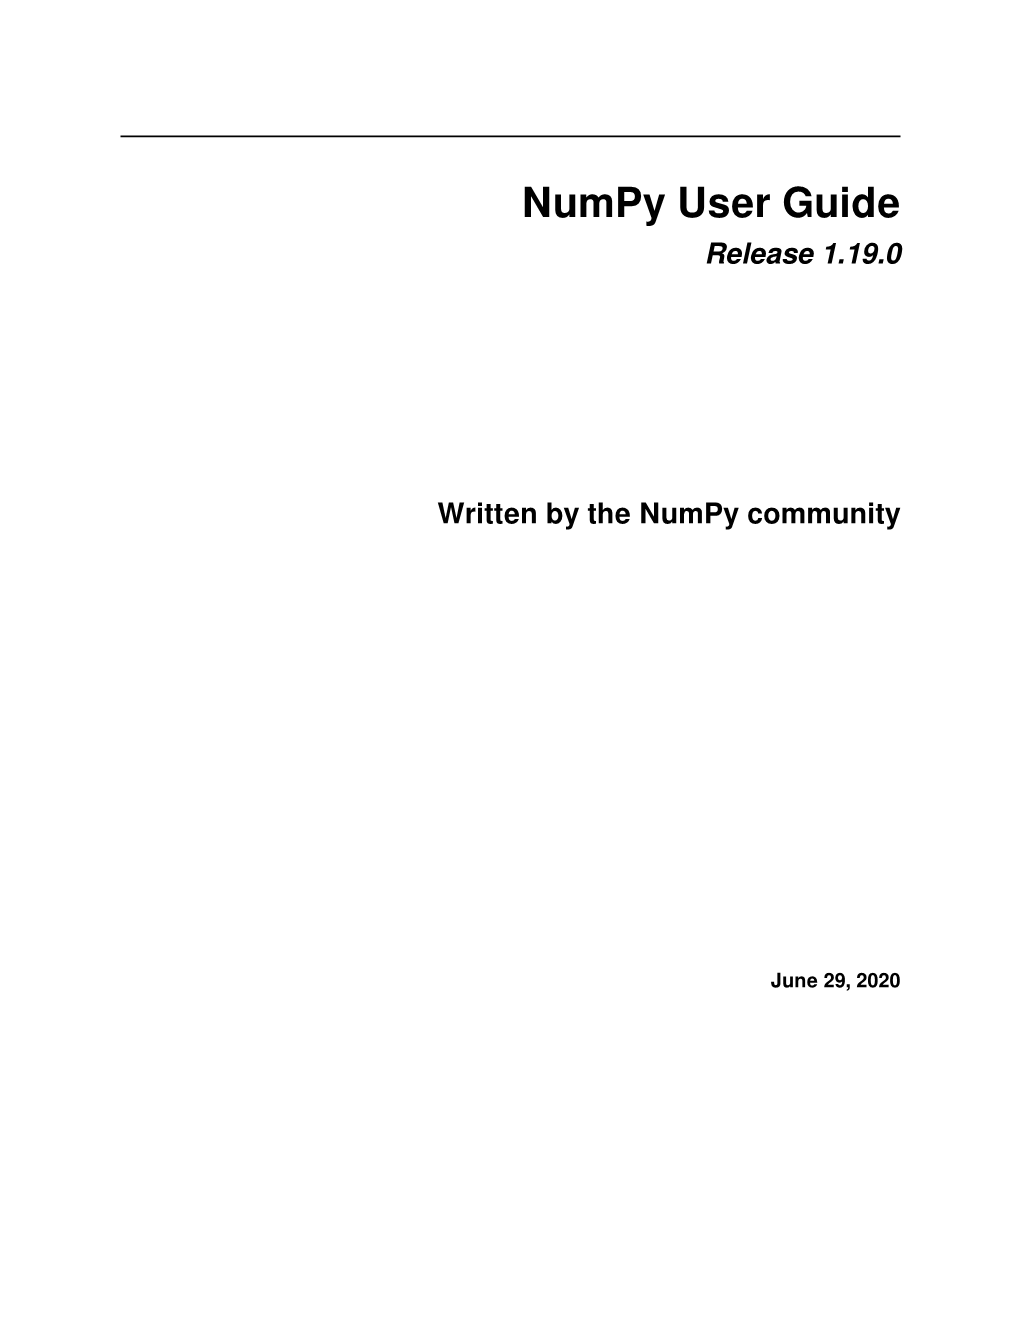 Numpy User Guide Release 1.19.0